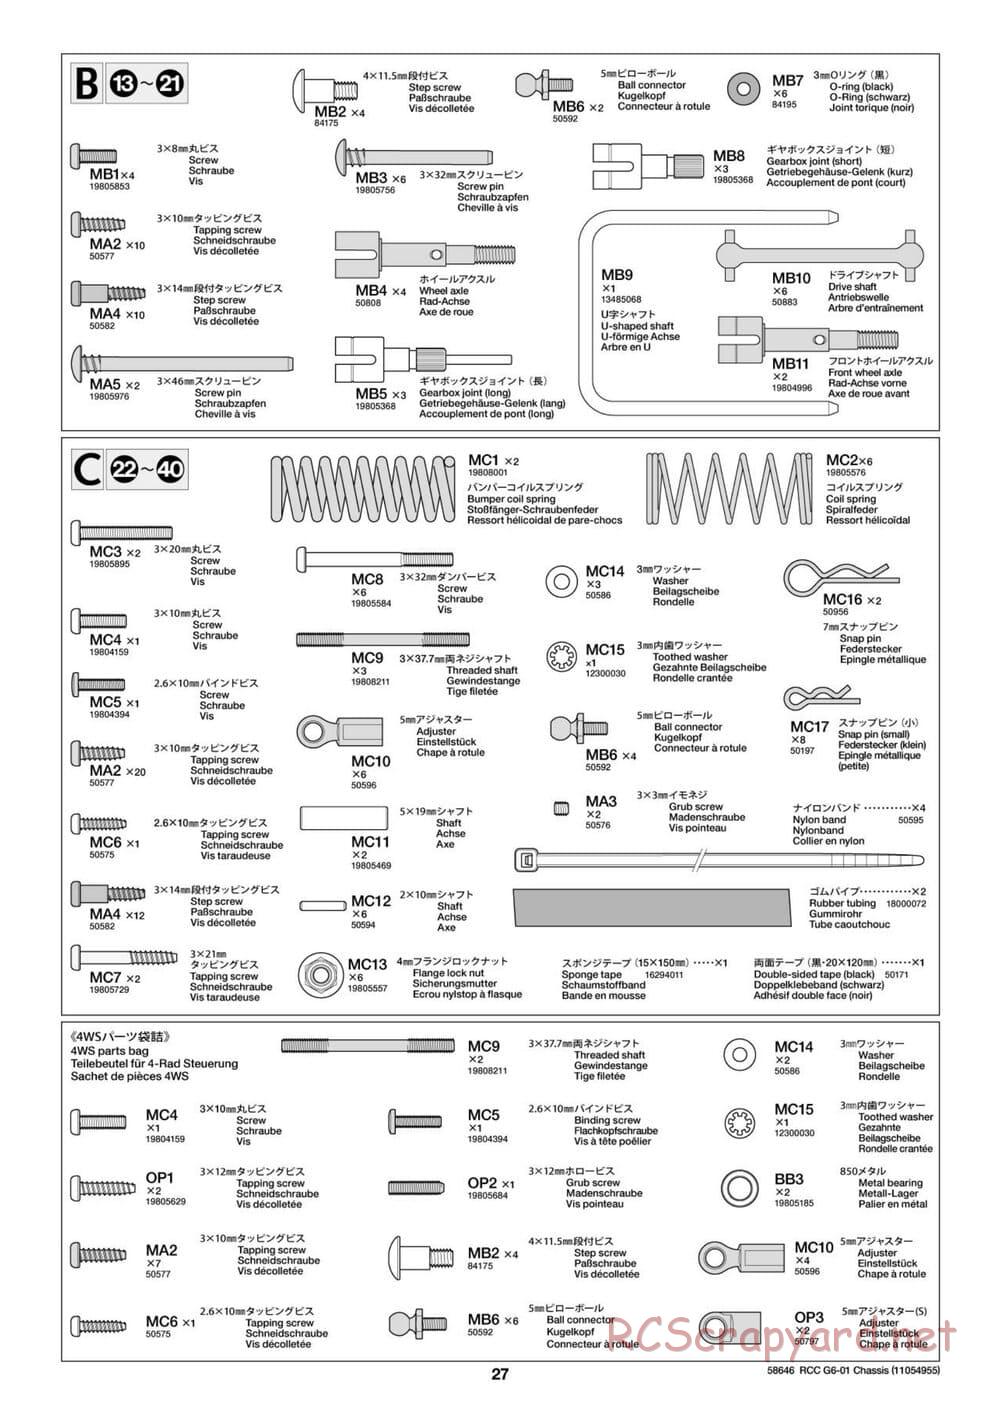 Tamiya - Konghead 6x6 - G6-01 Chassis - Manual - Page 27